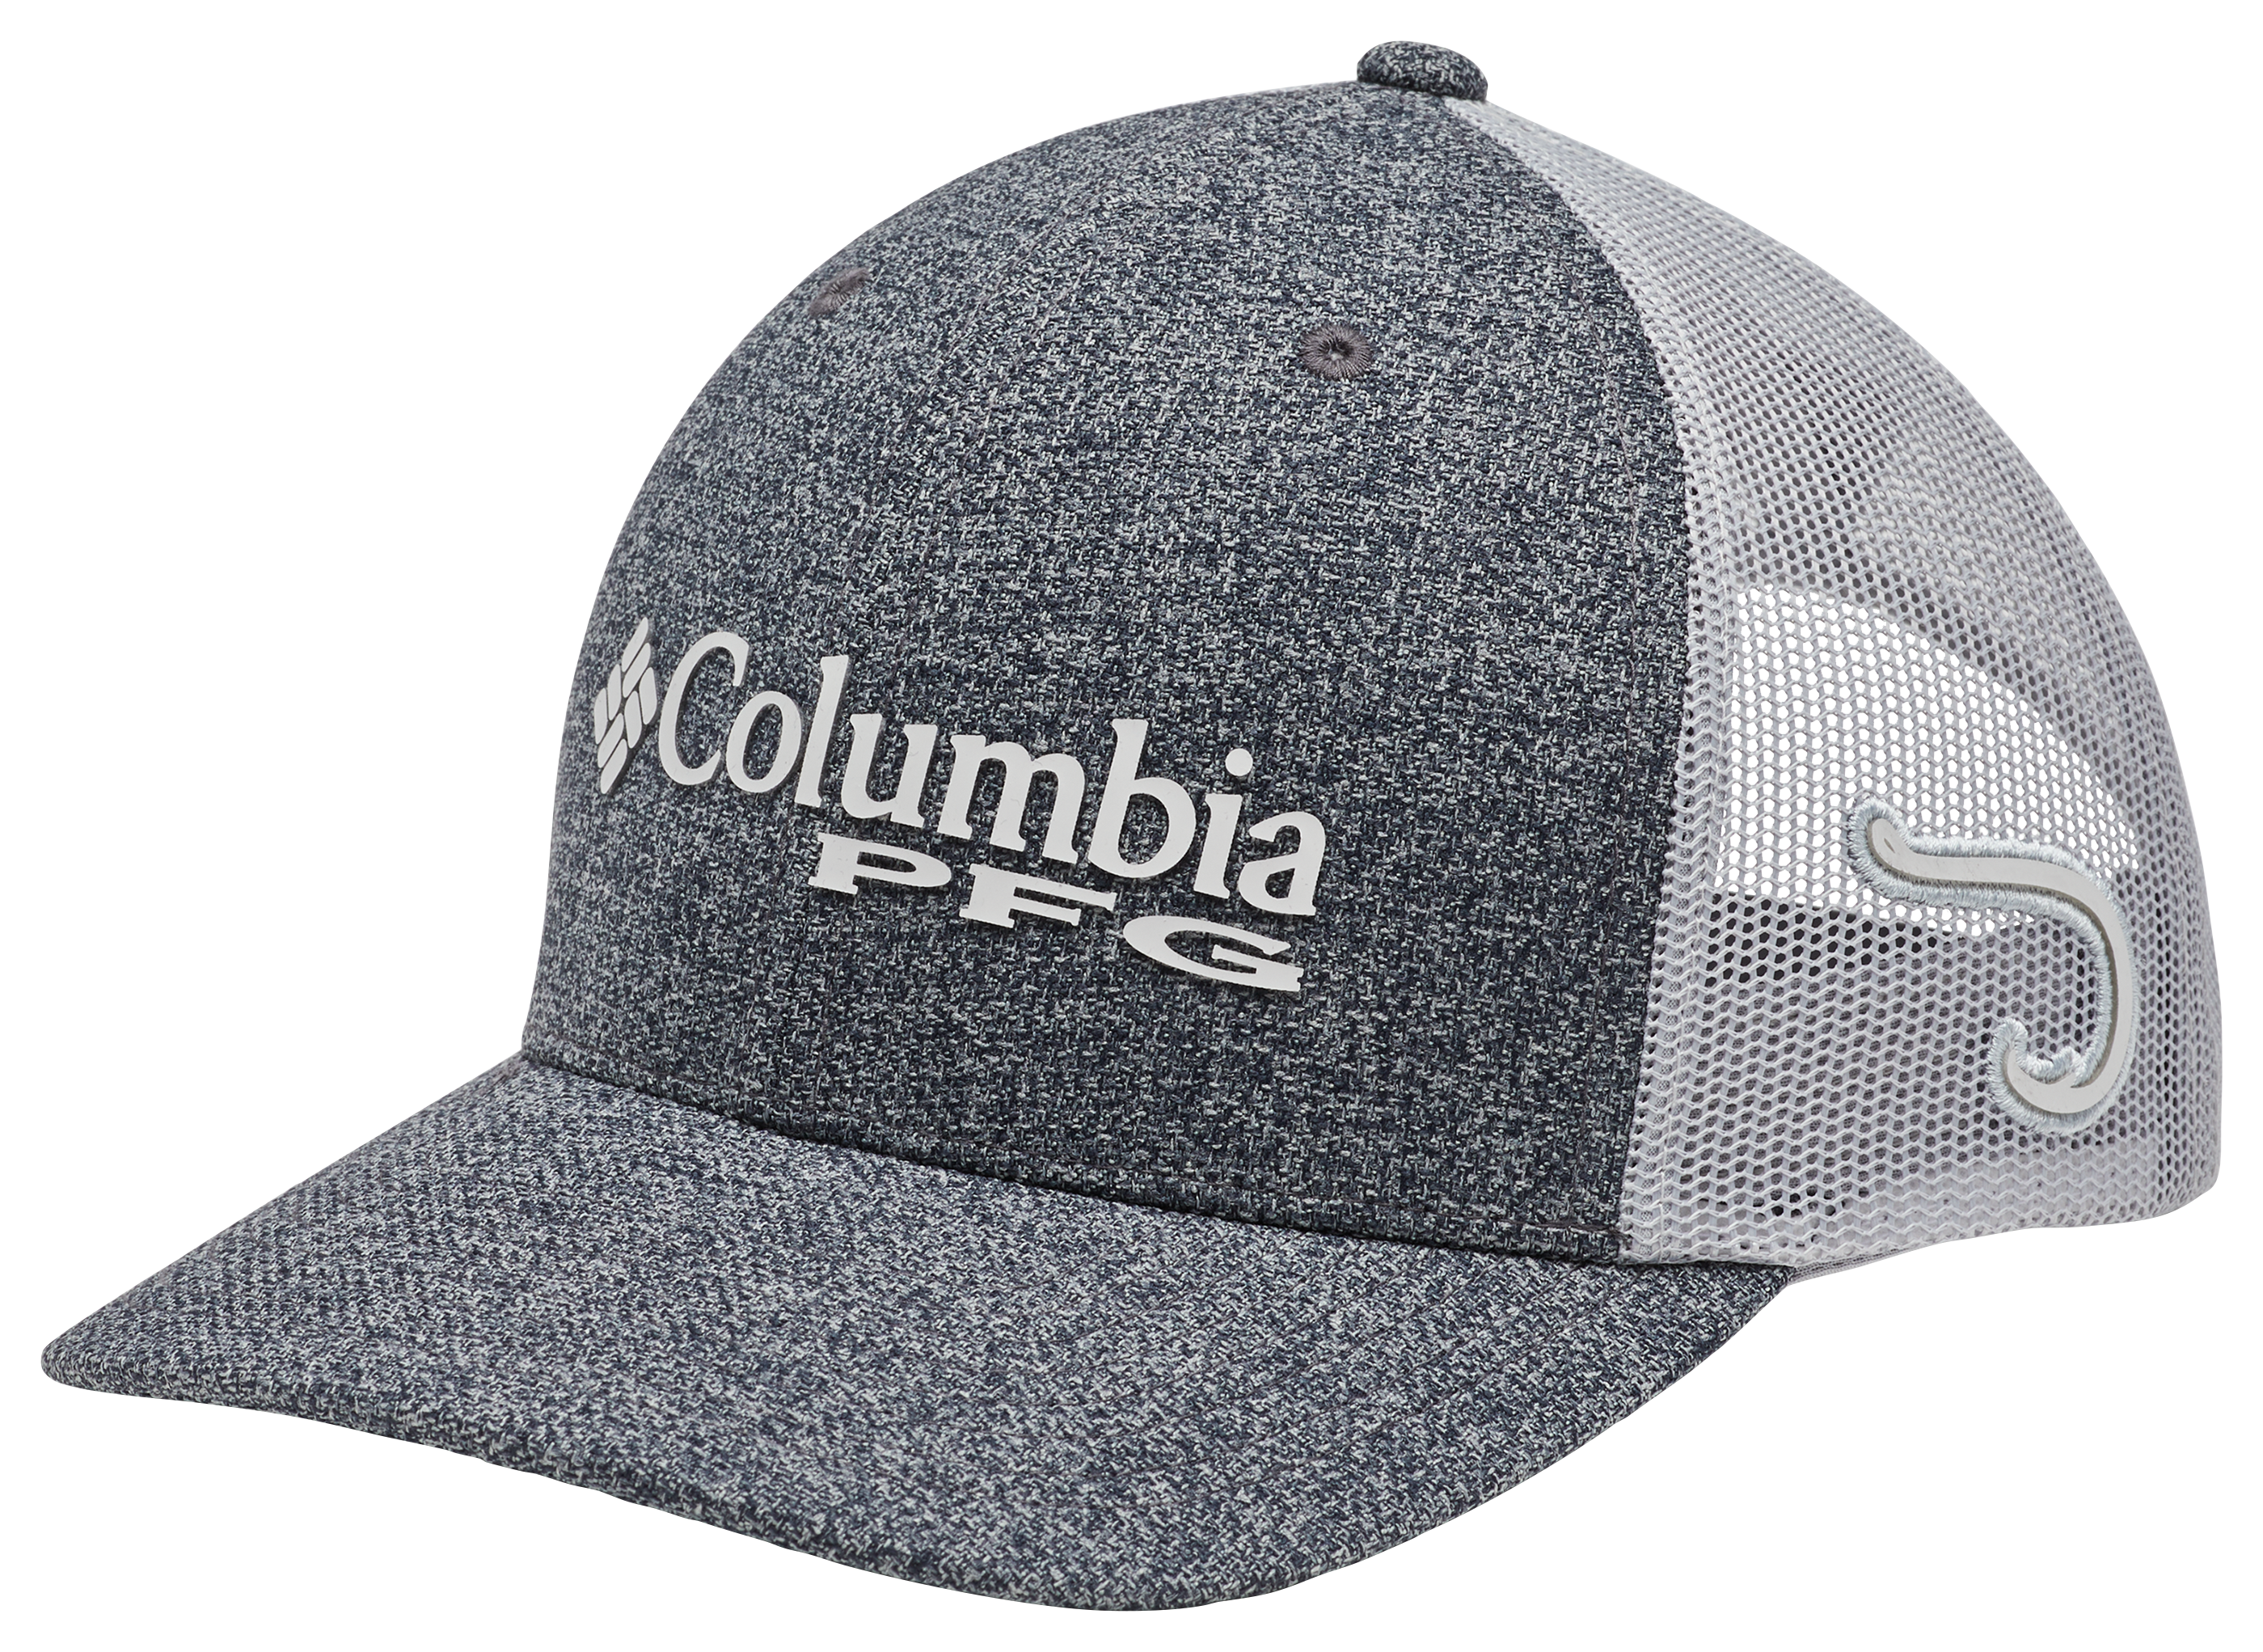 Columbia PFG Mesh Snapback Ball Cap